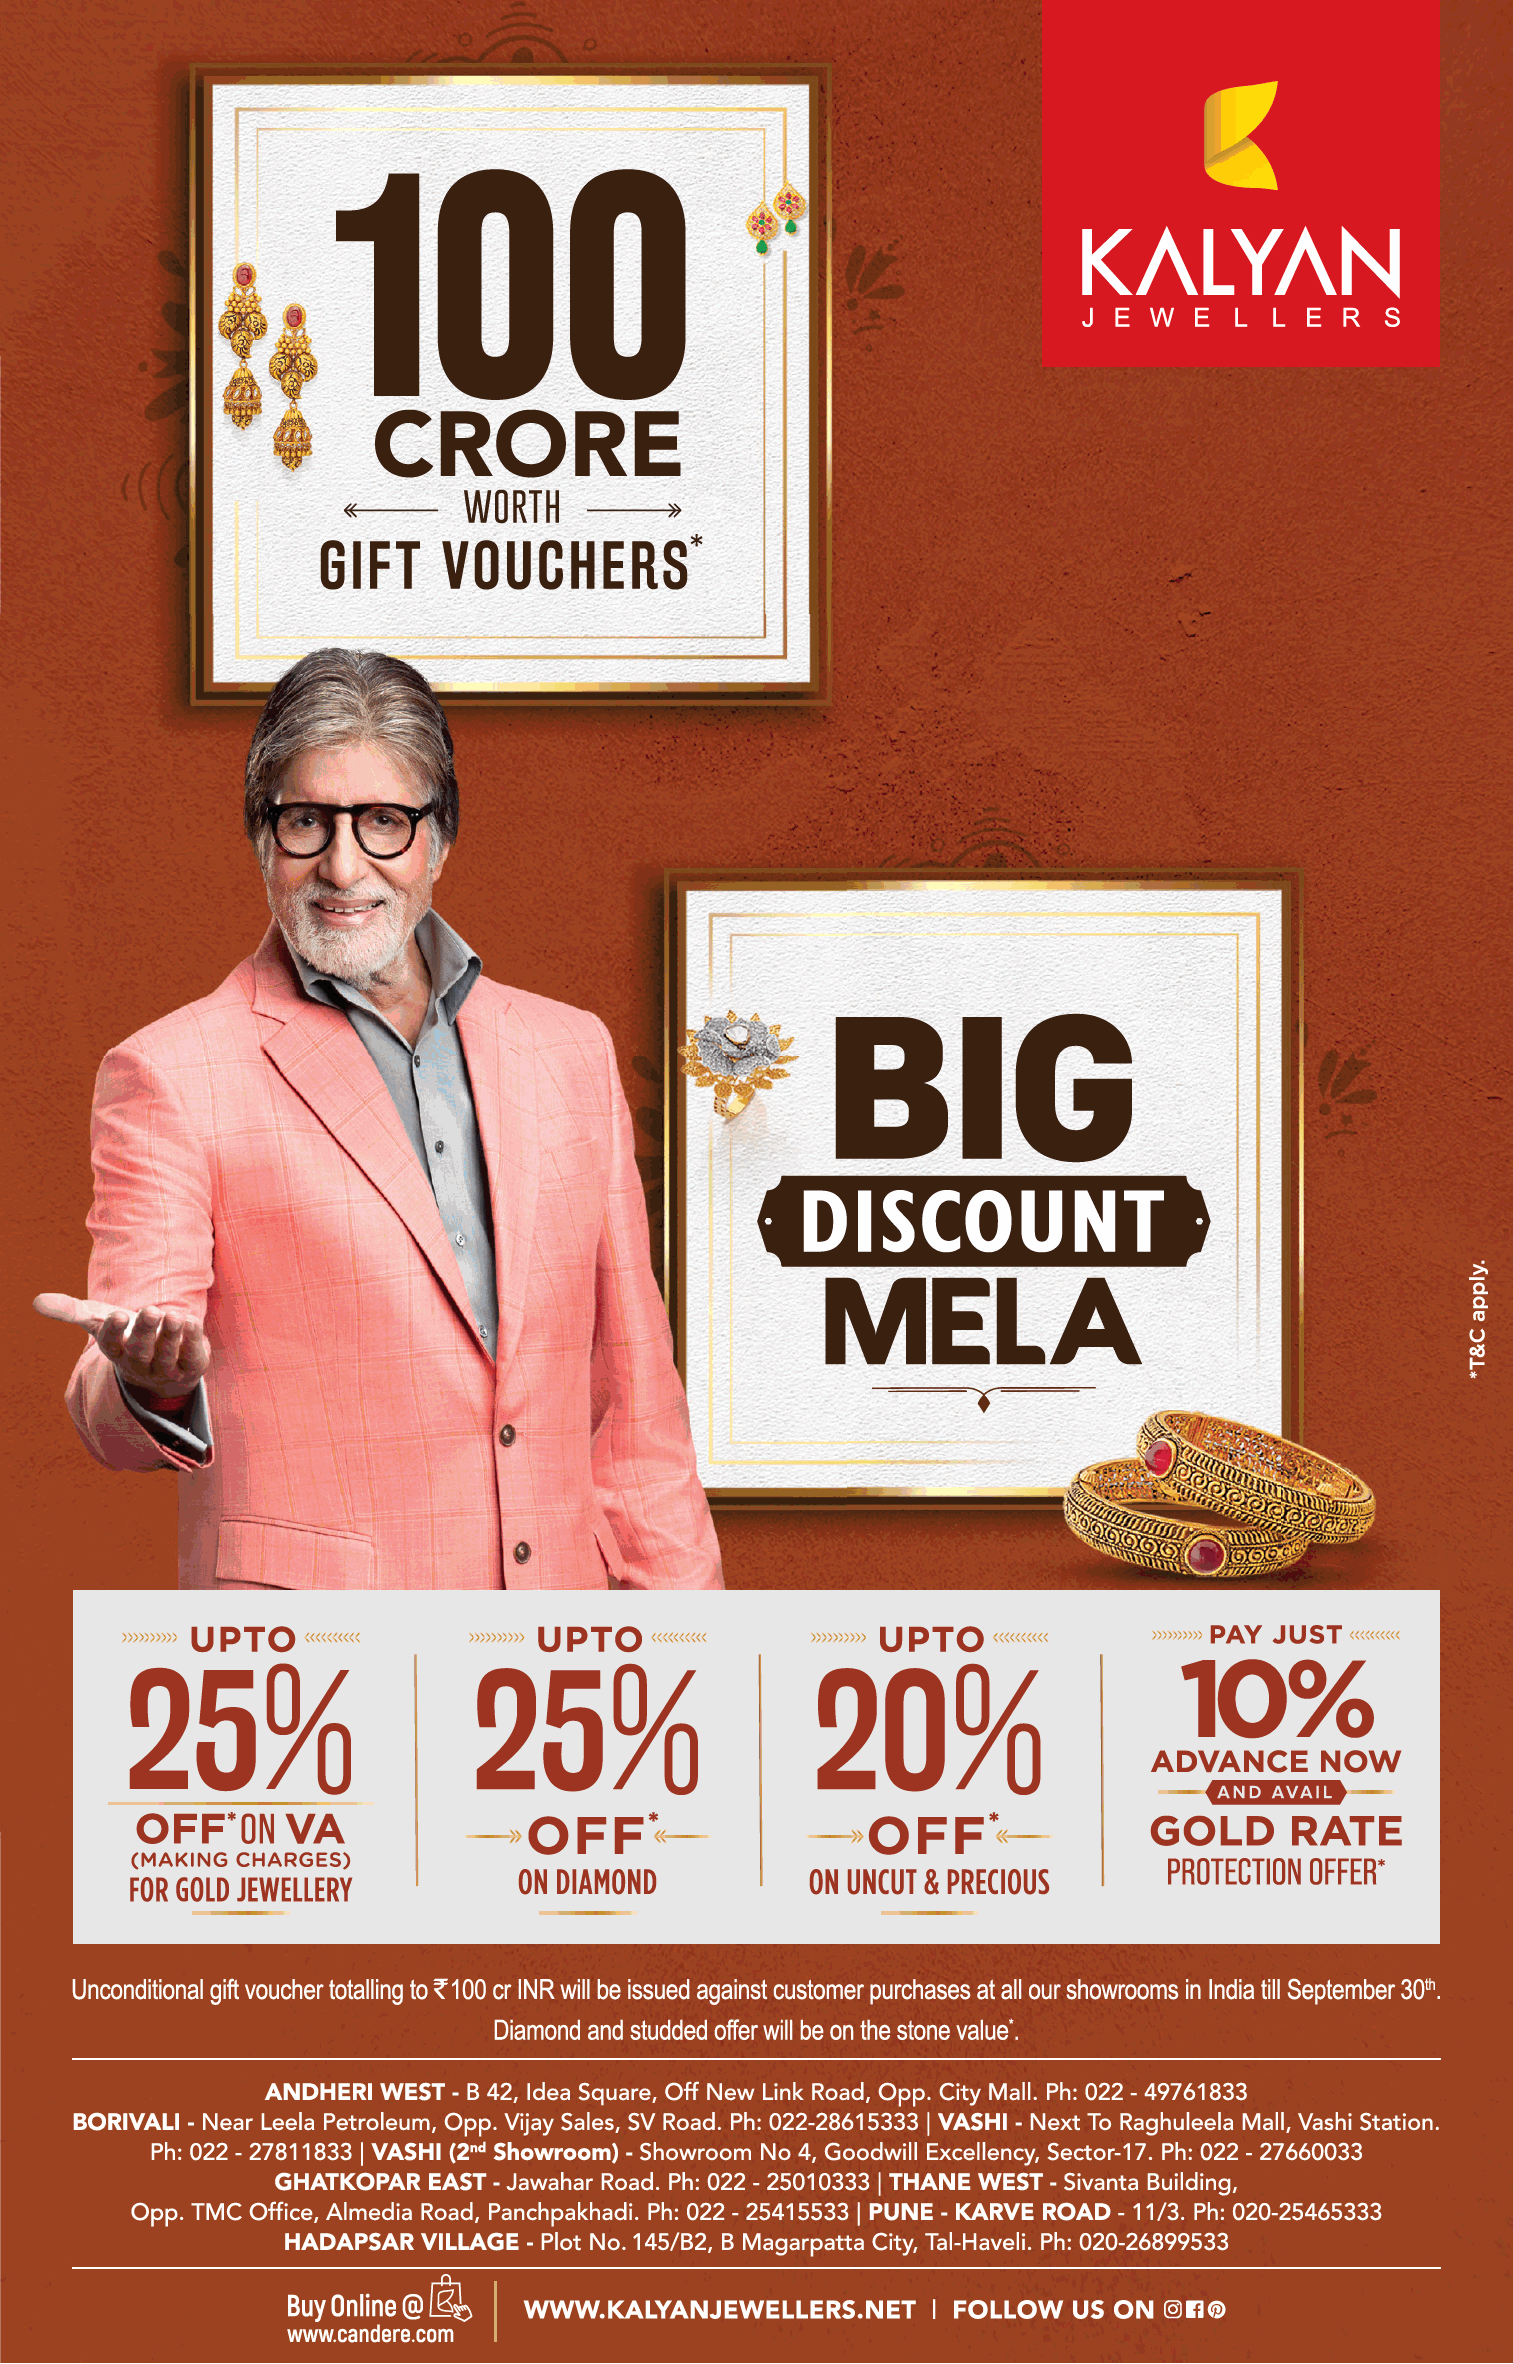 Kalyan Jewellers 100 Crore Worth Gift Vouchers Big Discount Mela featuring Amitabh Bachchan